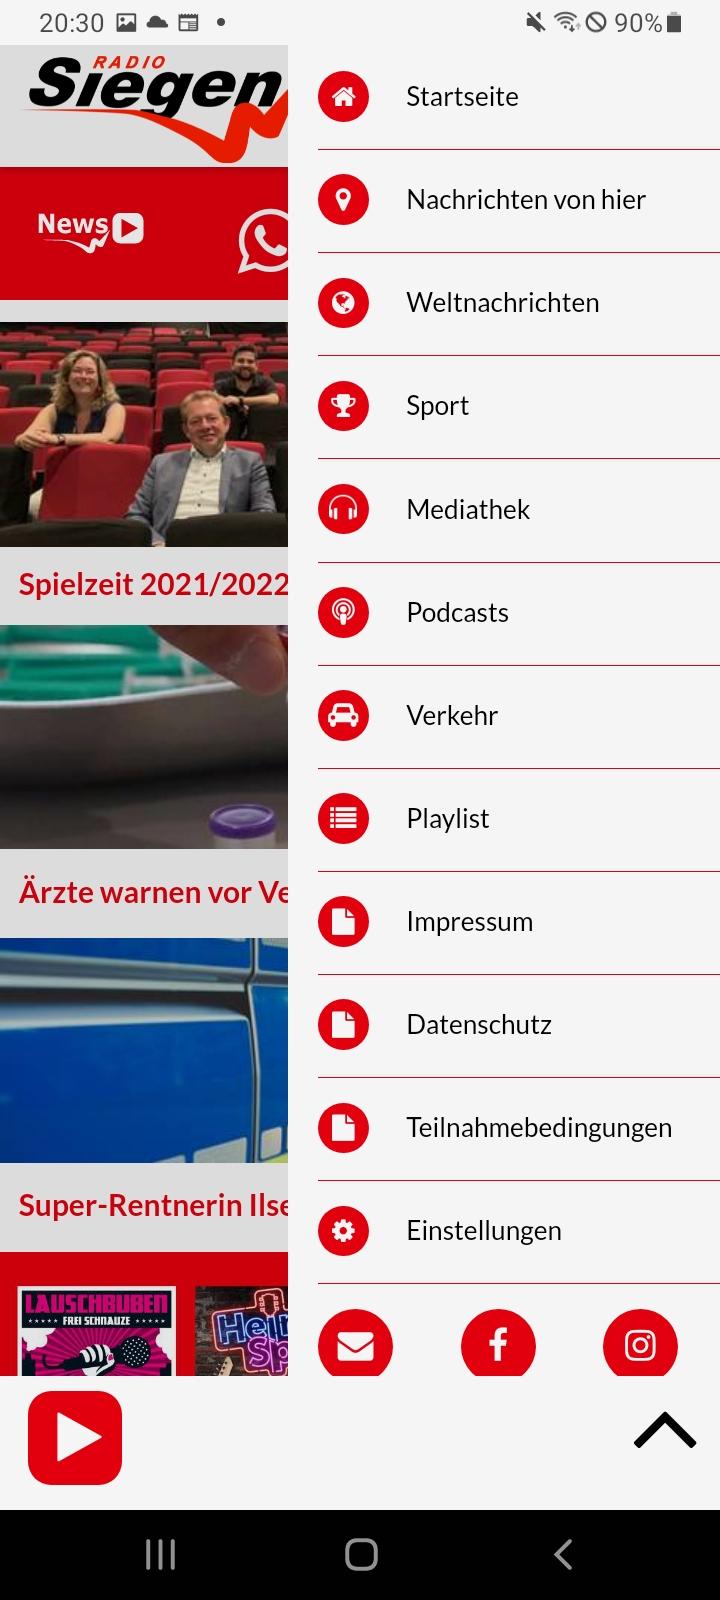 Radio Siegen for Android - APK Download